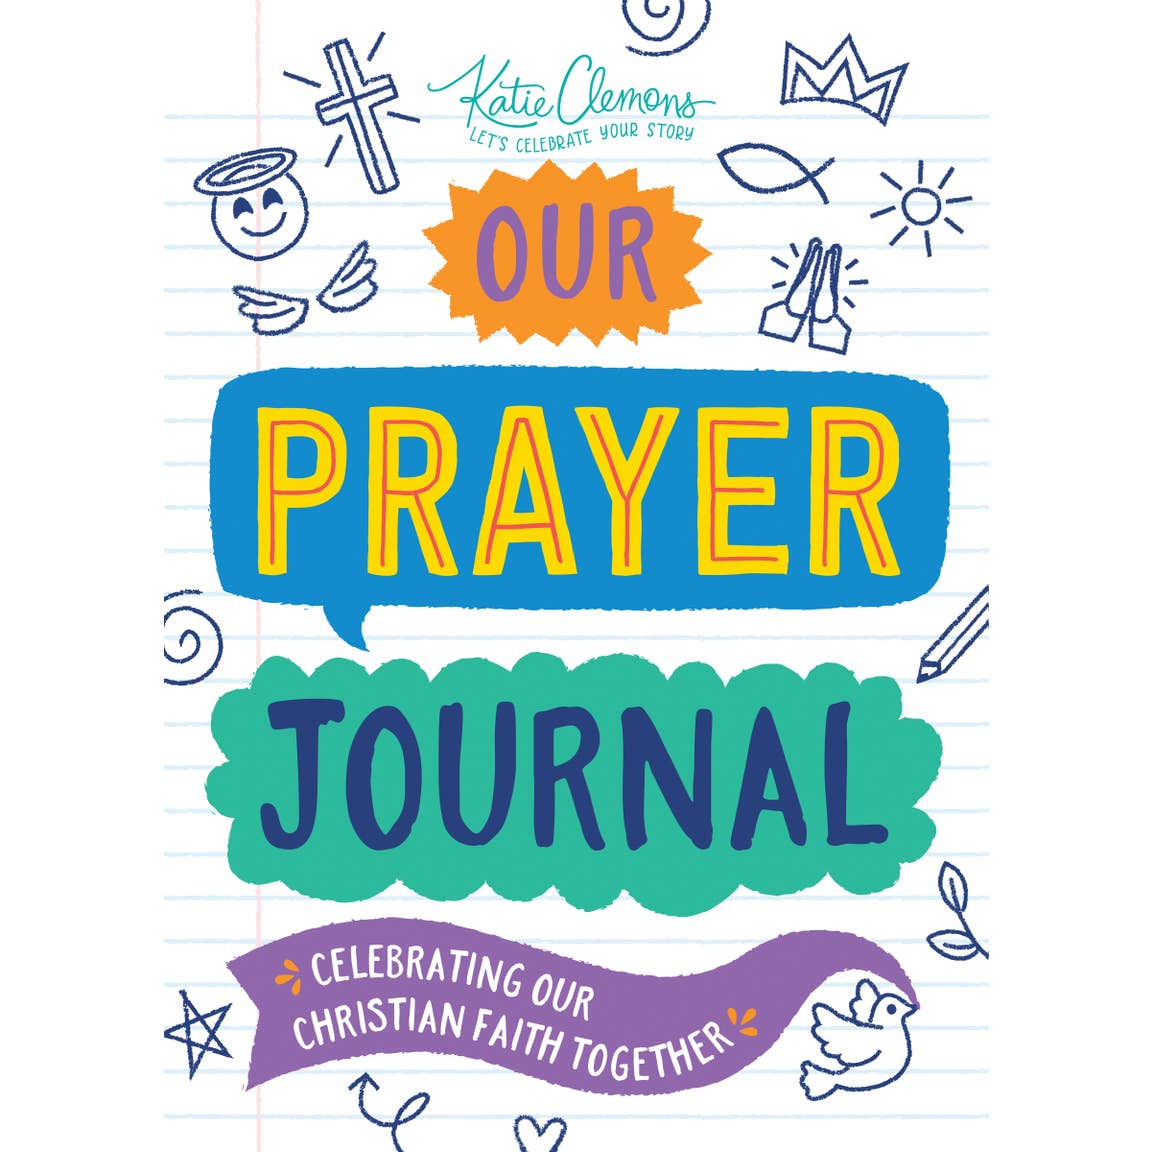 Our Prayer Journal